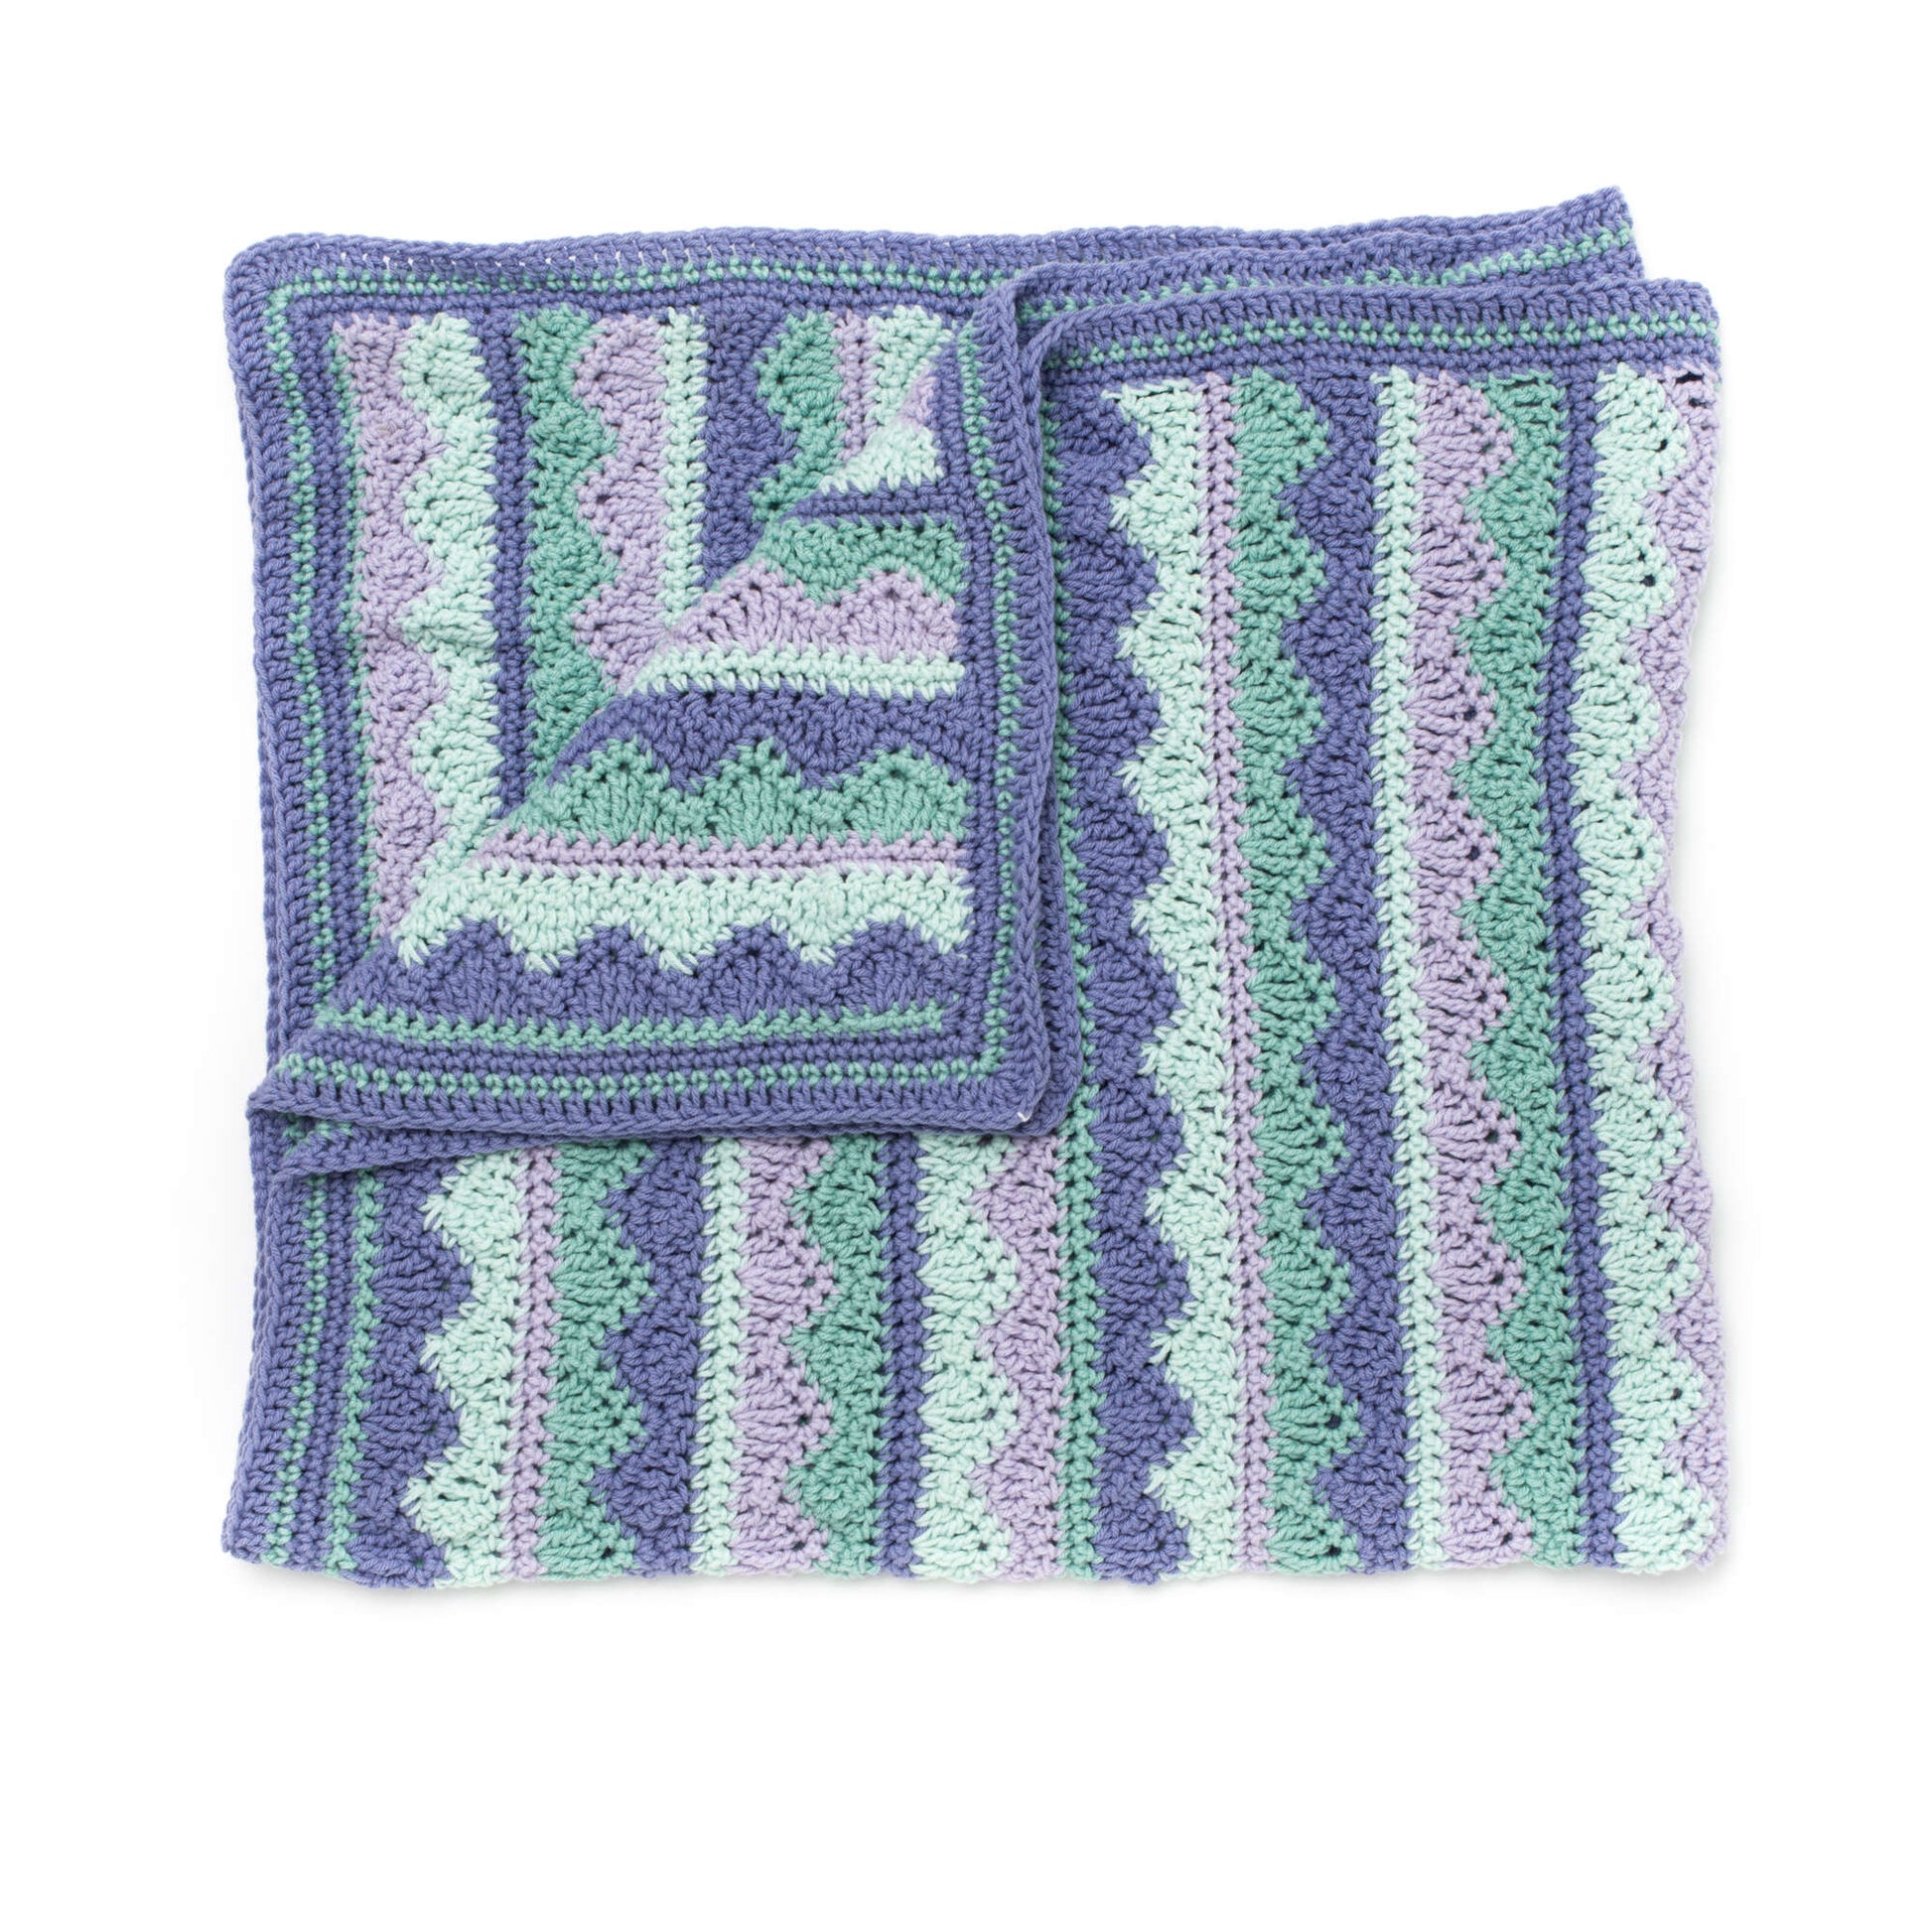 Free Caron Summer Mist Throw Crochet Pattern